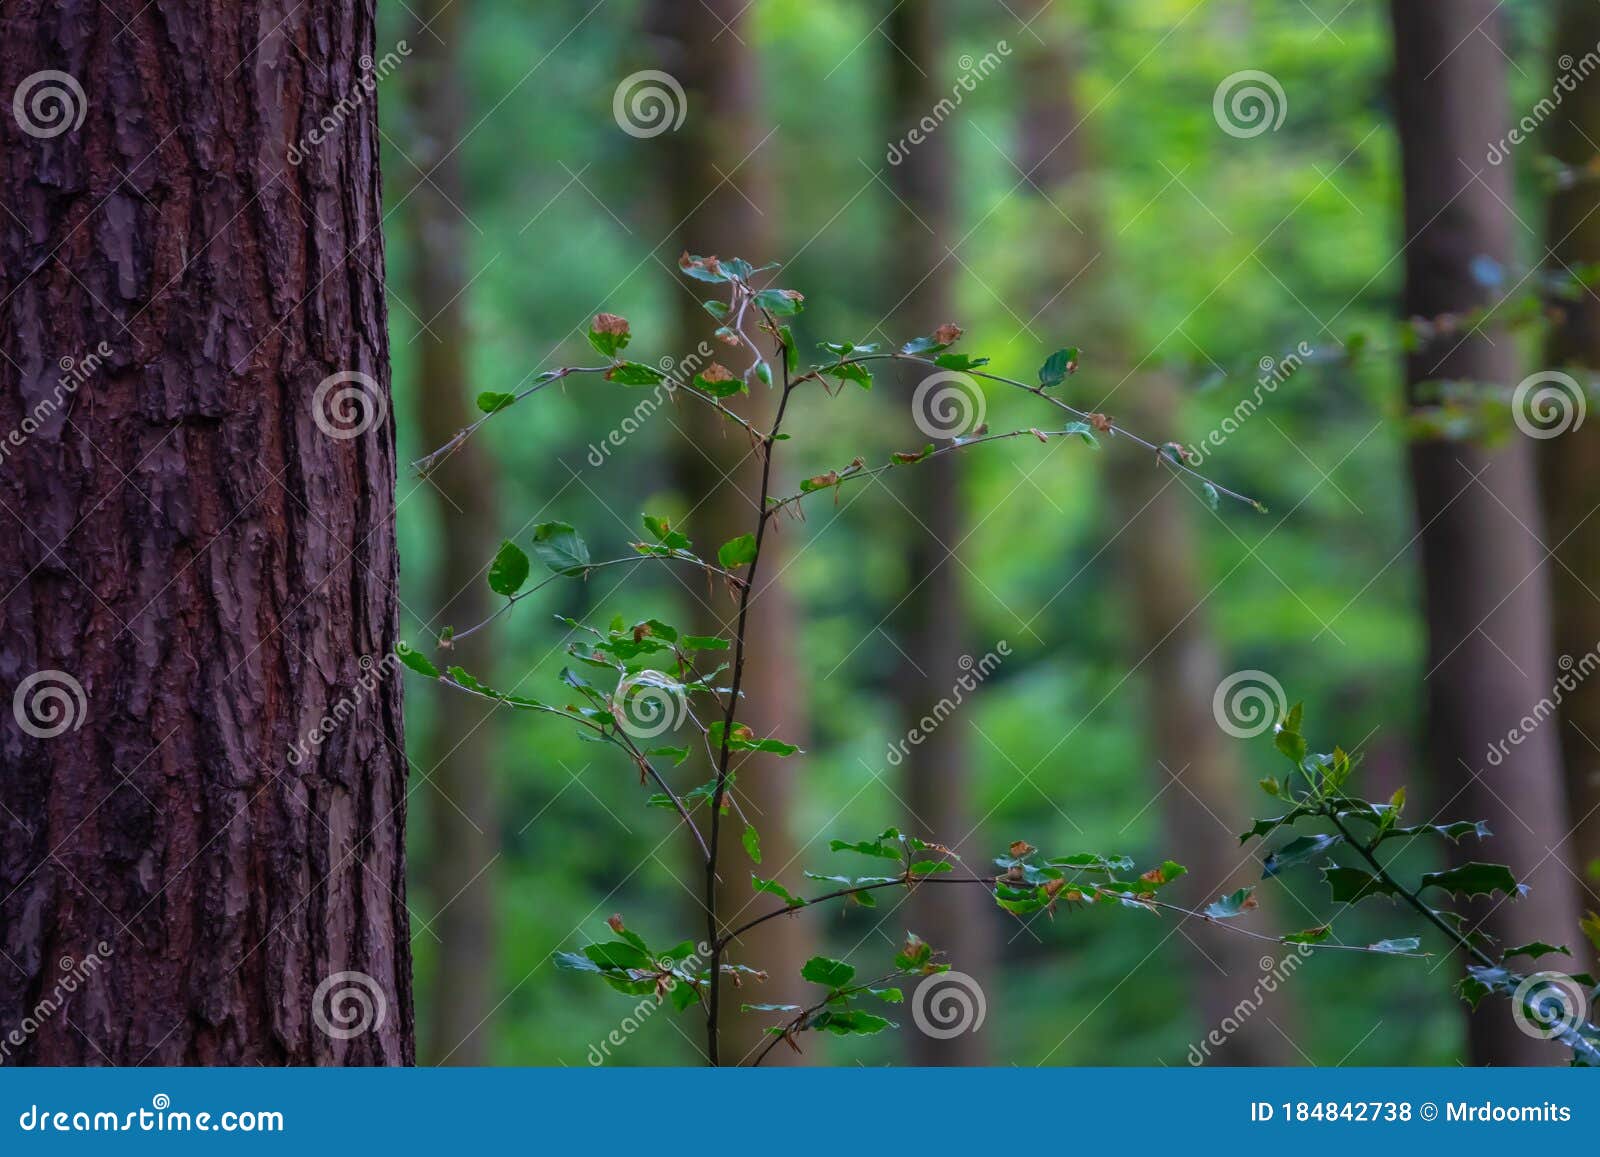 Peaceful Forest Background Stock Photo Image Of Fresh